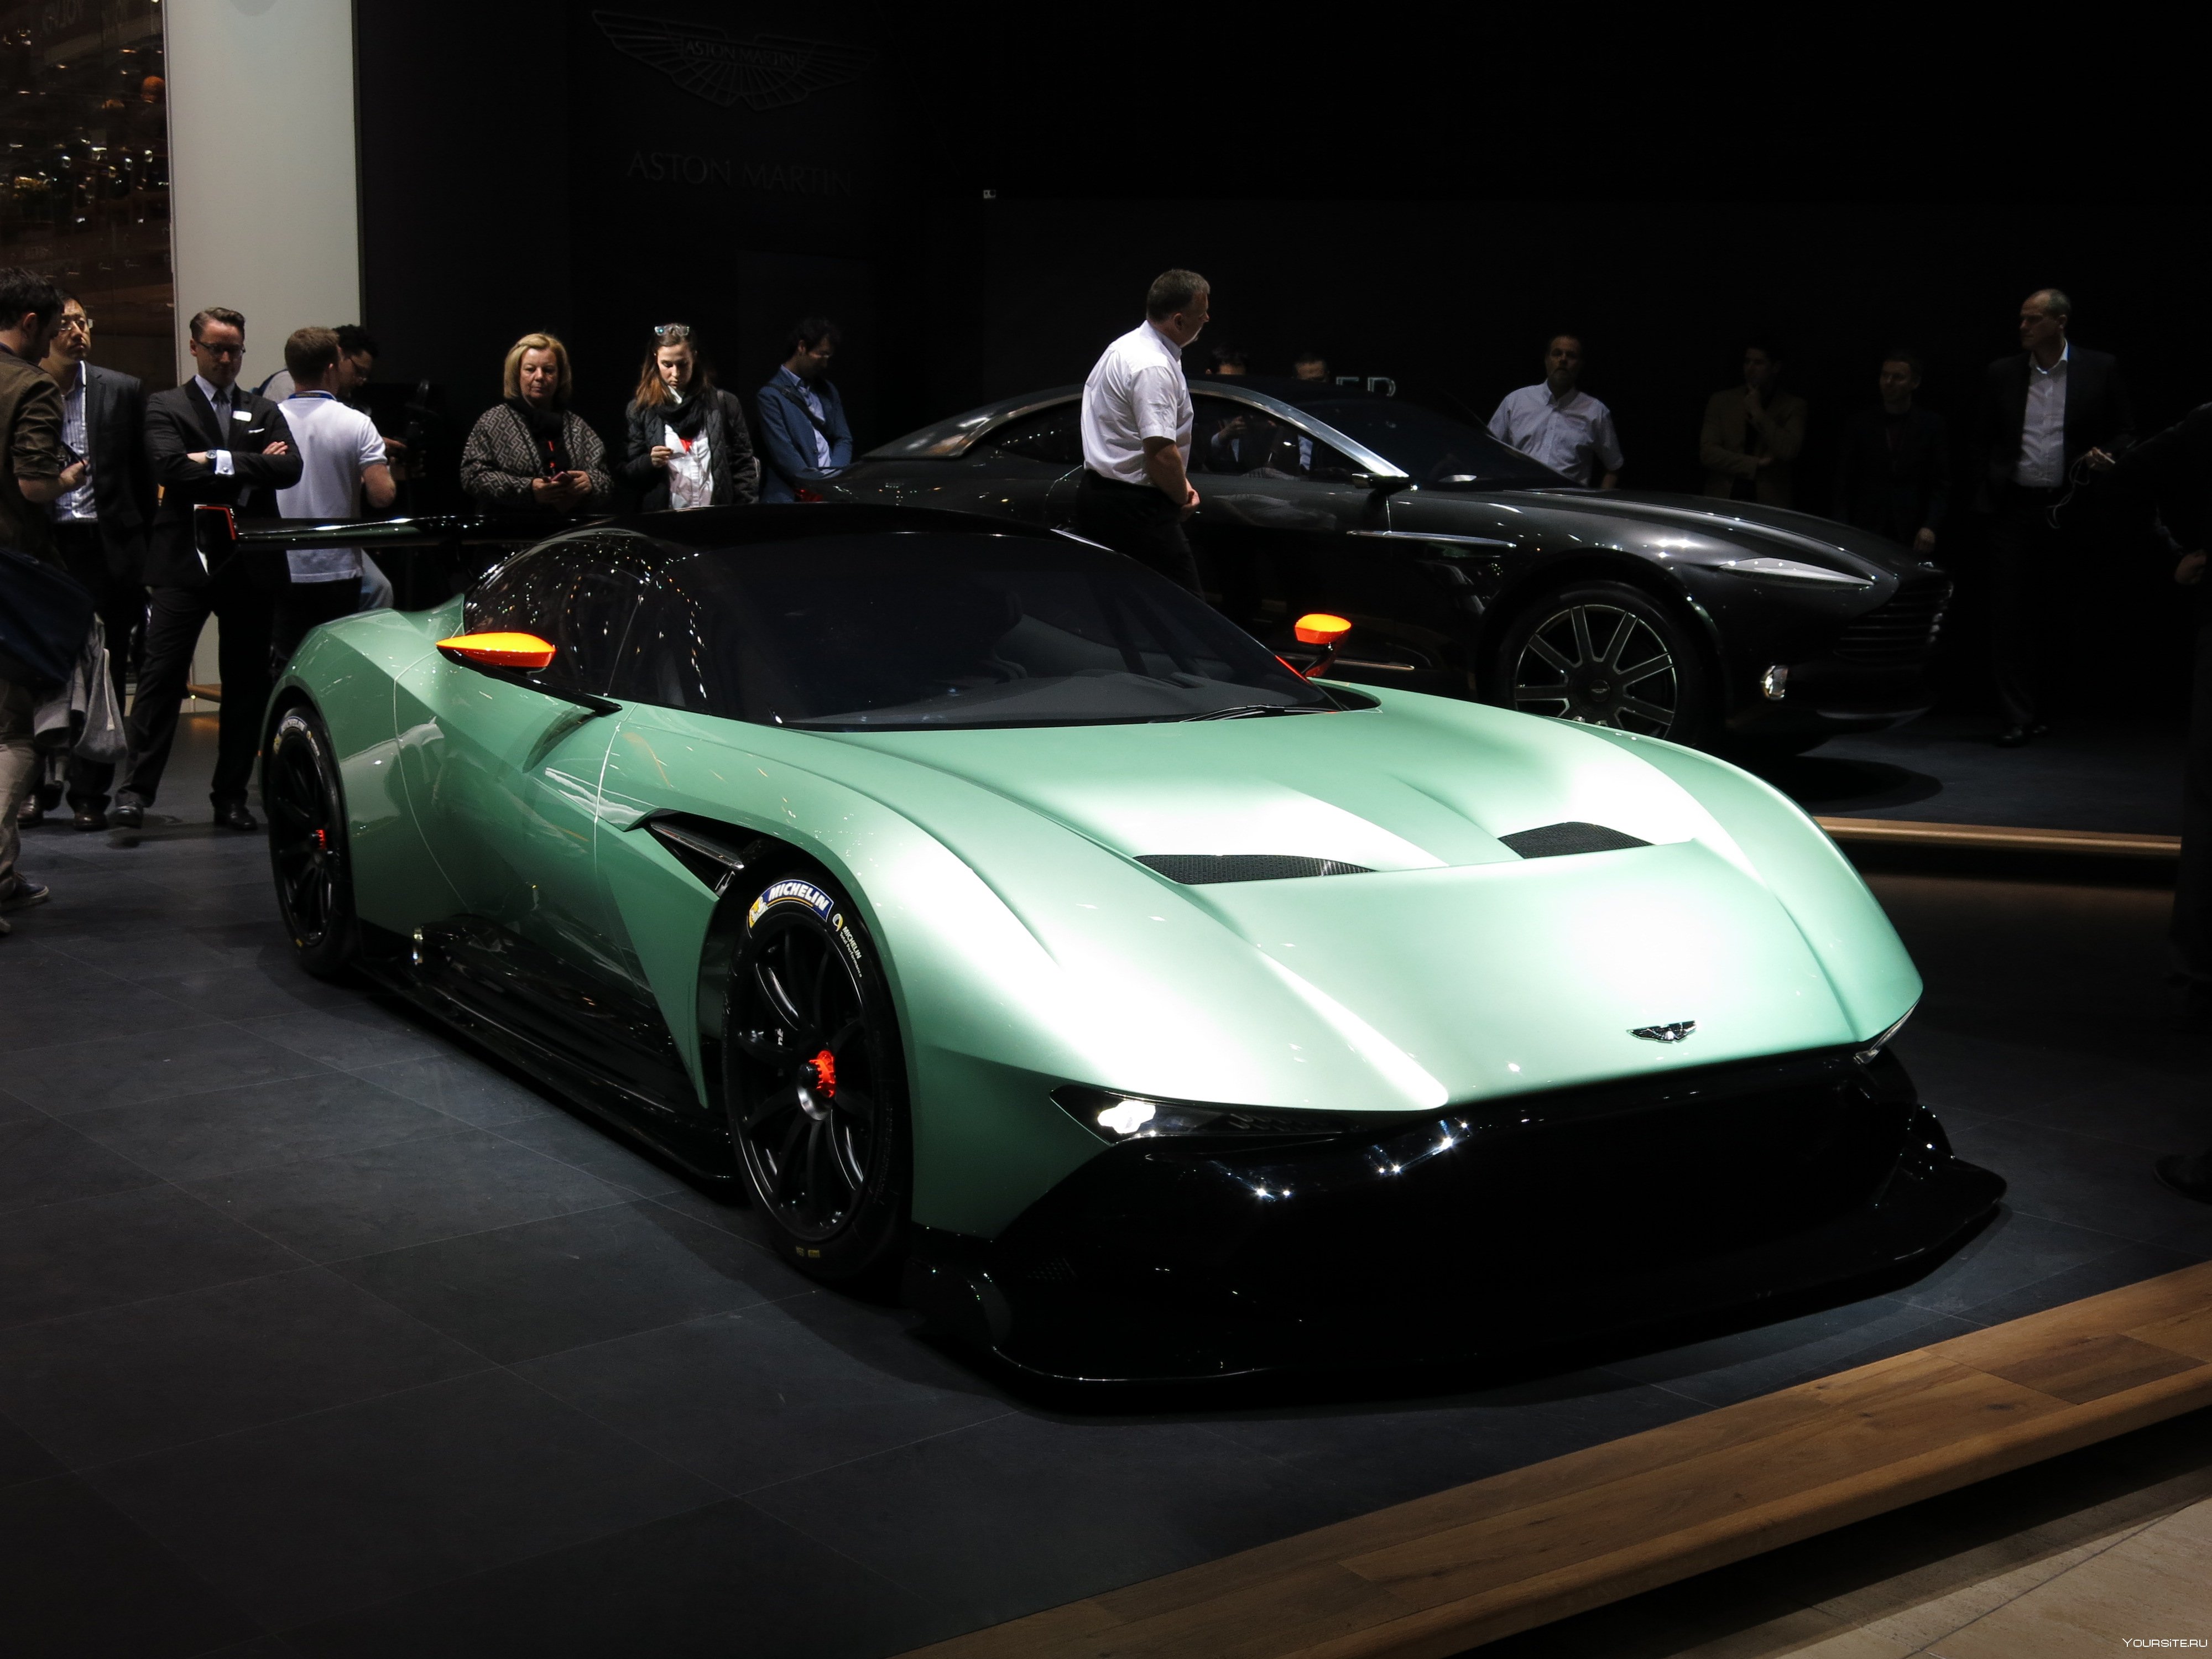 Лучшие автомобили видео. Aston Martin Vulcan. "Aston Martin" "Vulcan" "2015" PM.